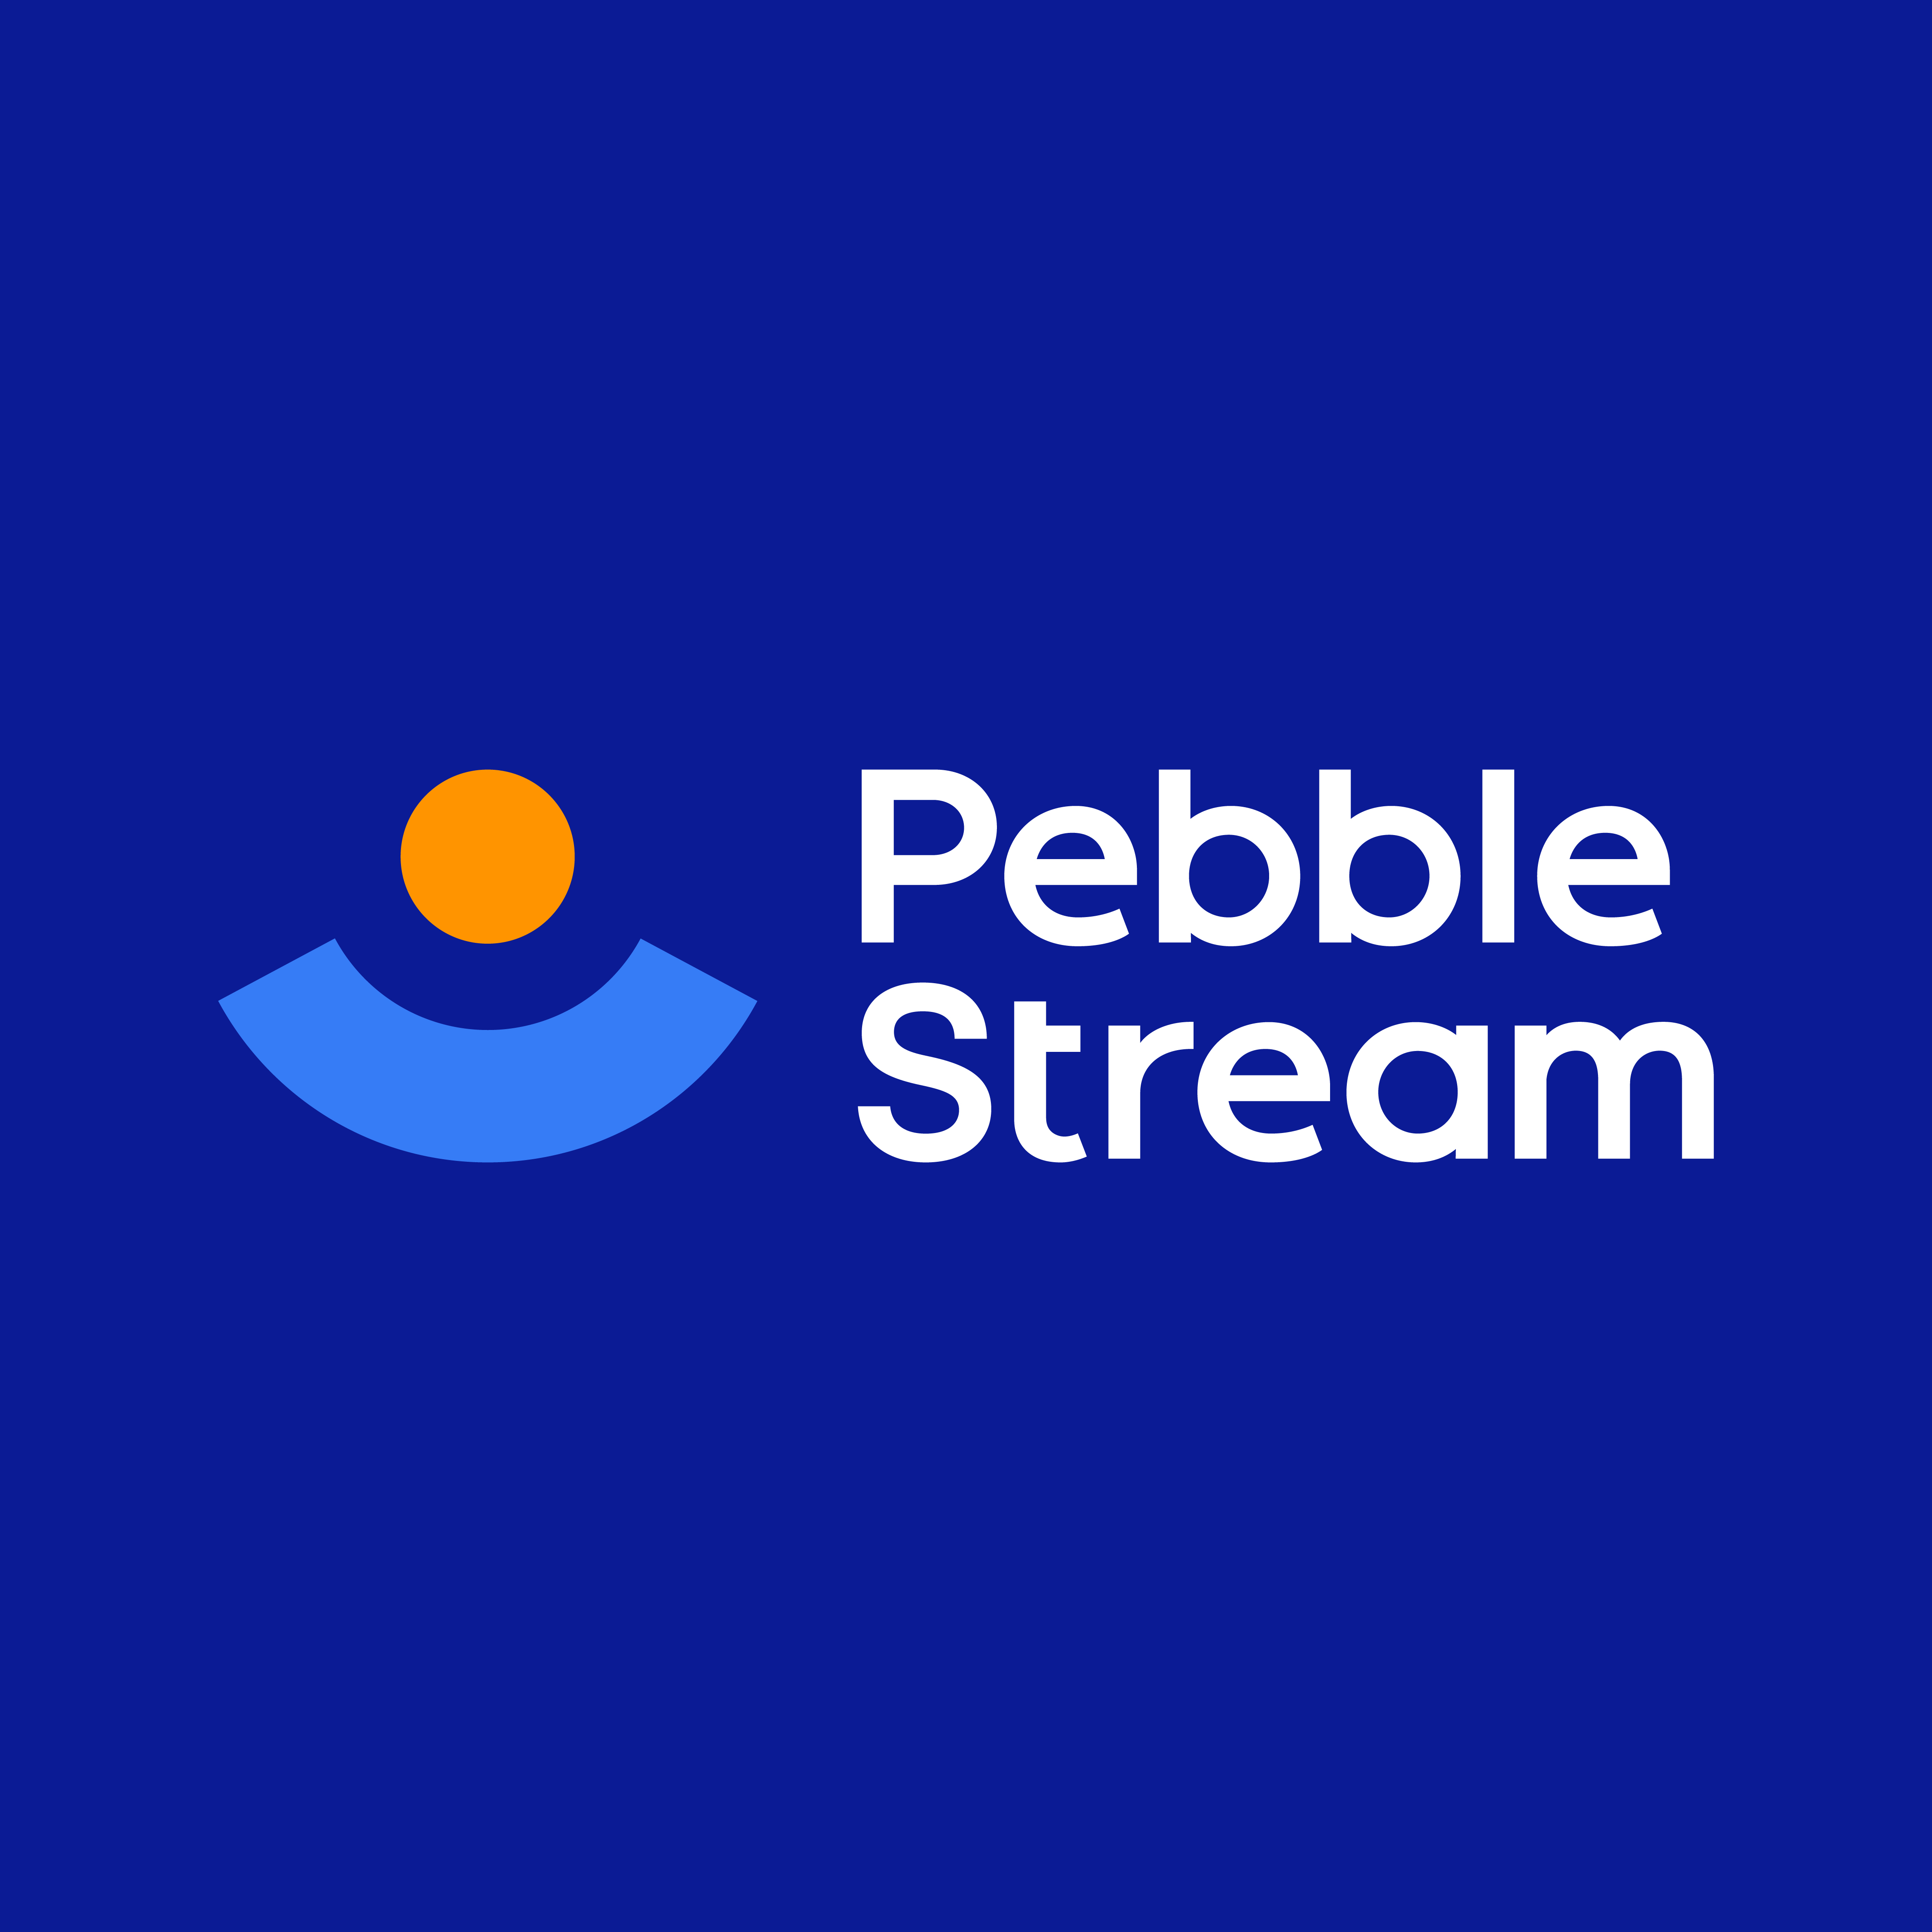 Pebble Stream Brand Identity